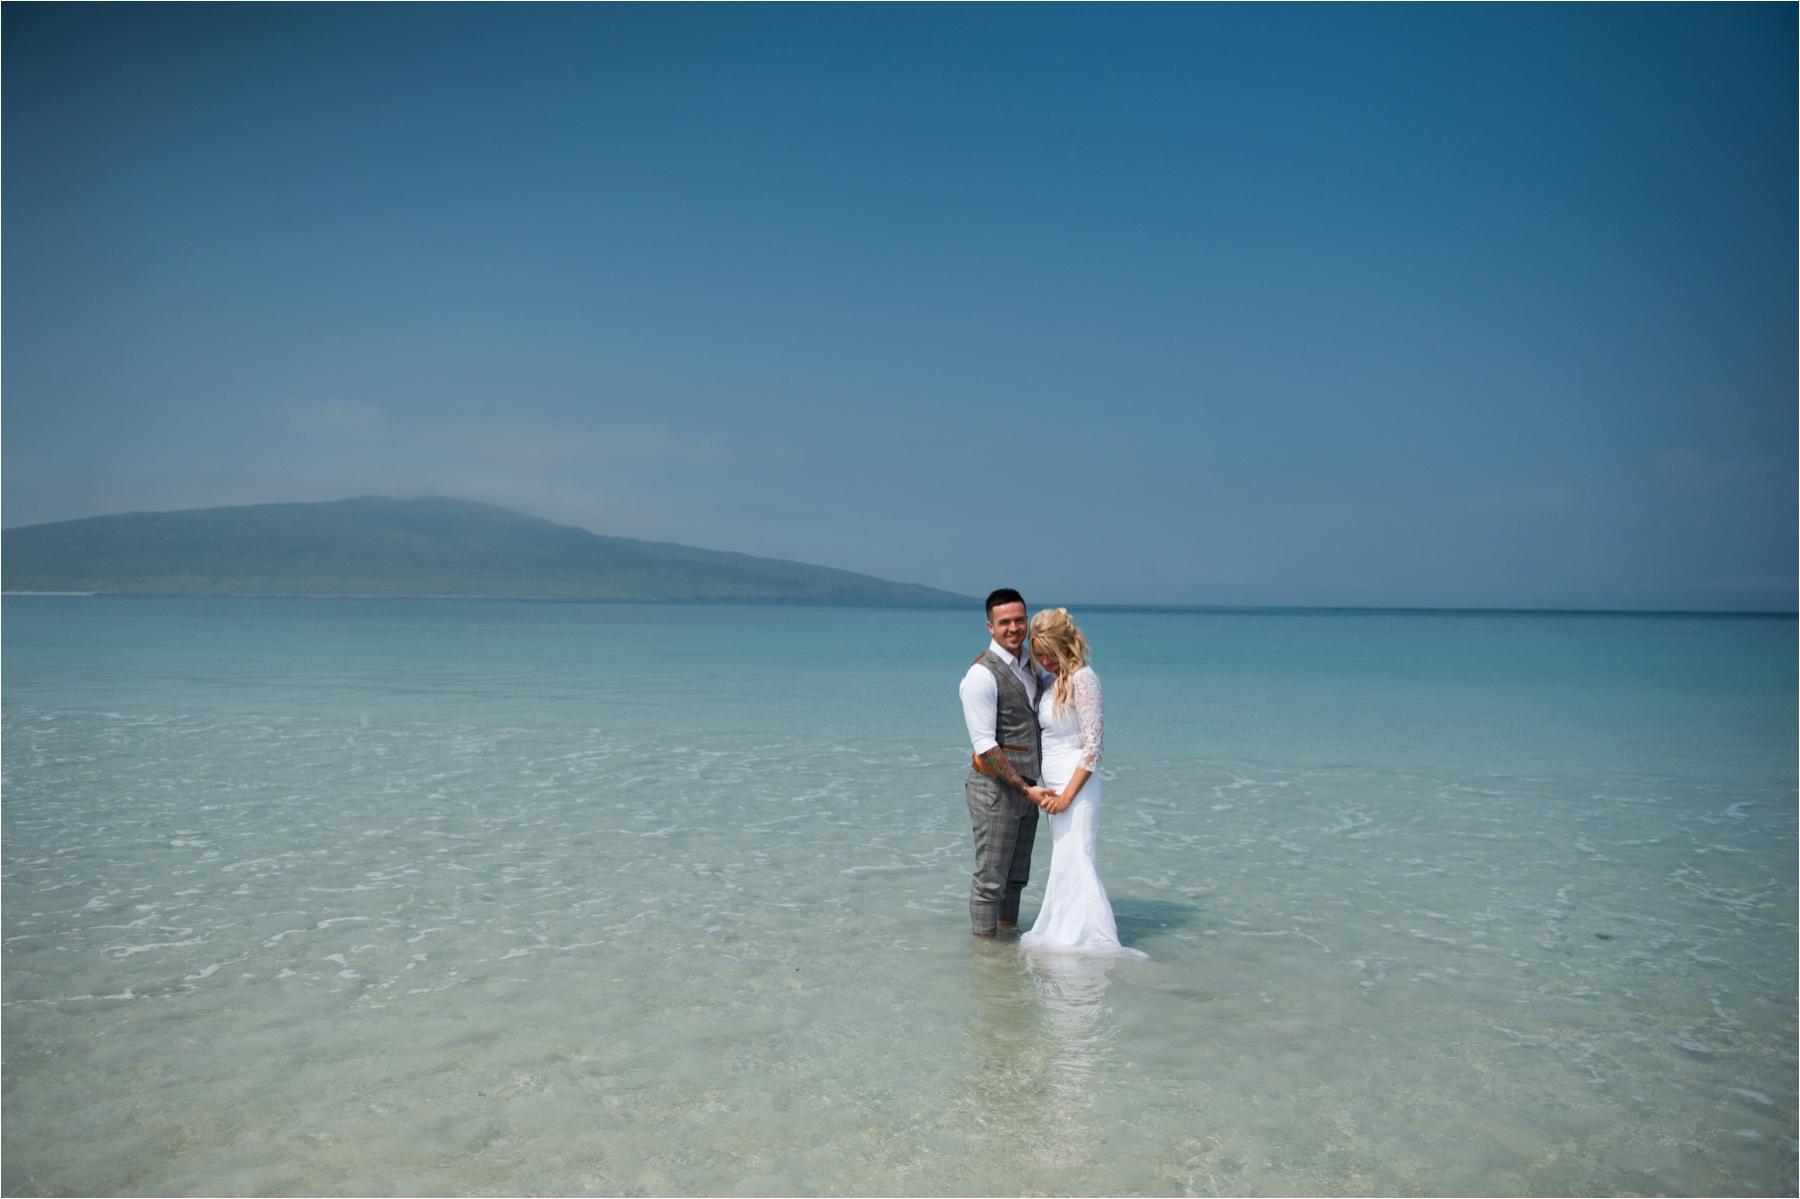 Scottish island beach wedding photographer Soraya photography